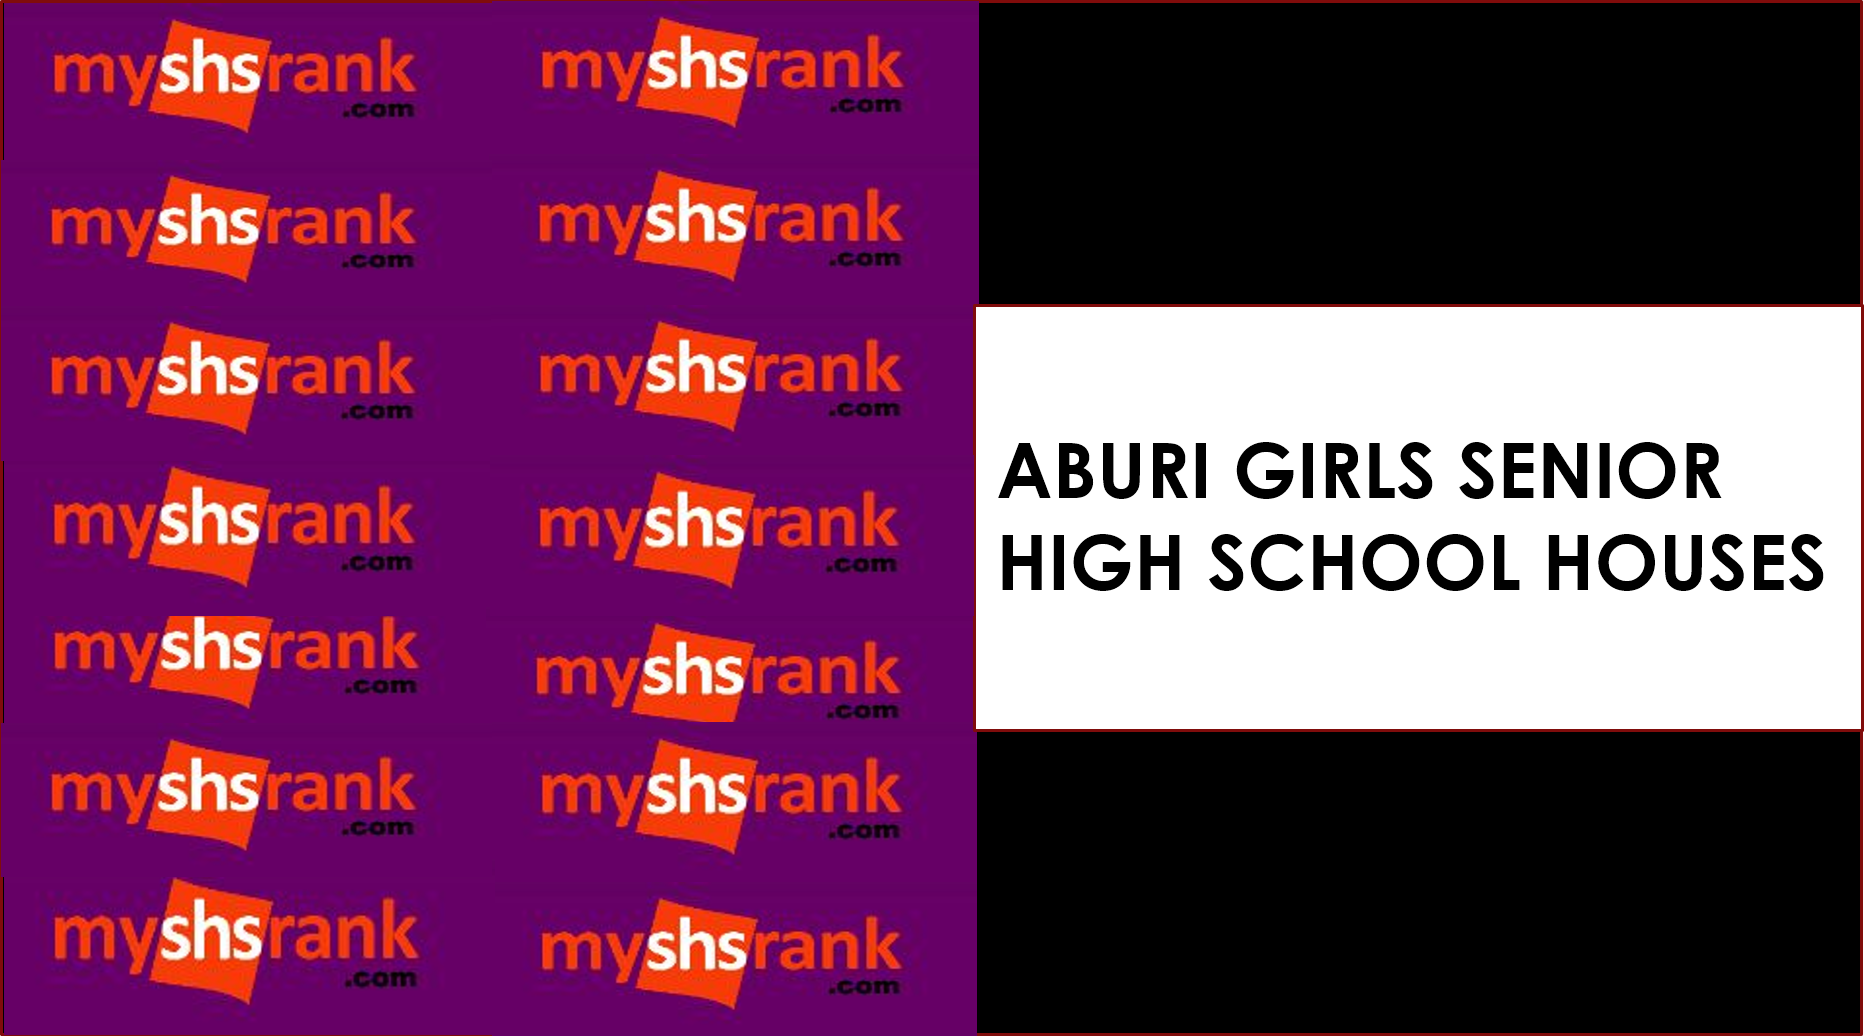 Aburi girls senior high school